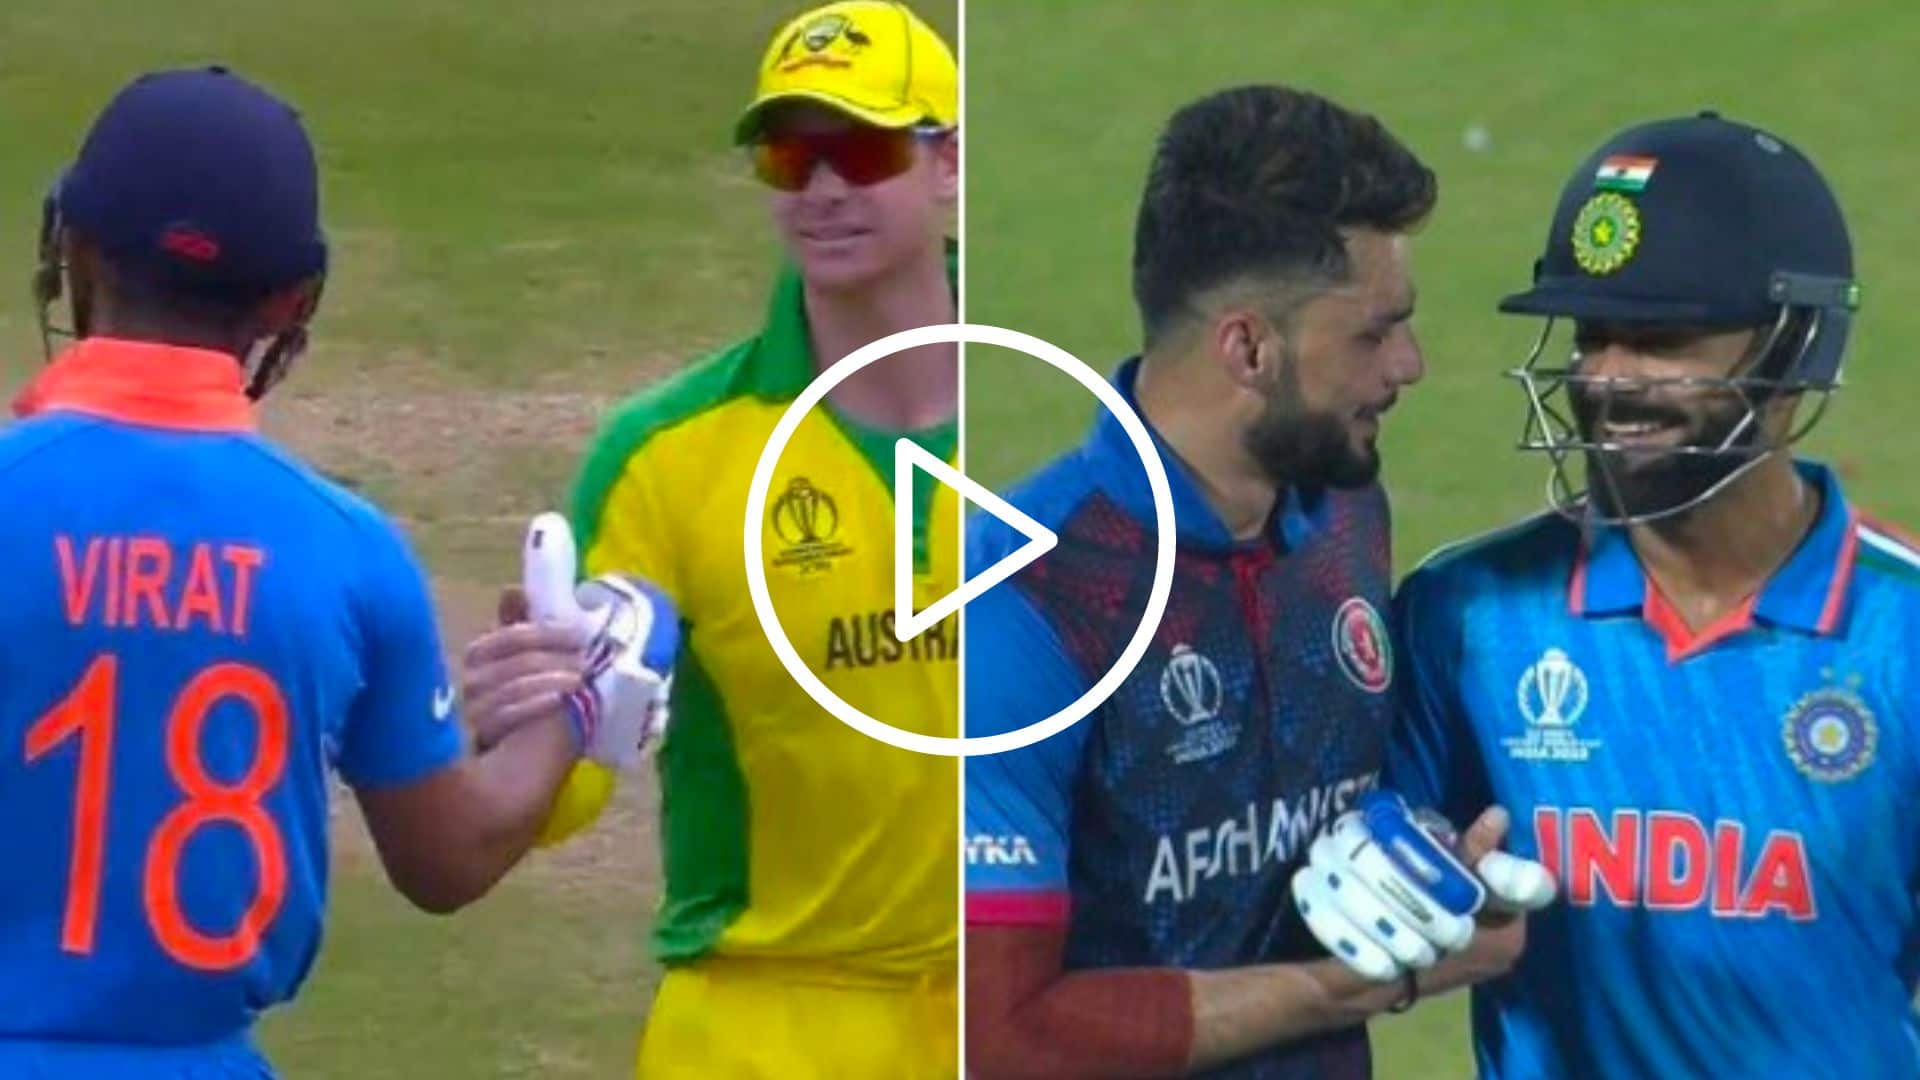 [Watch] ICC Highlights Virat Kohli's Remarkable Sportsmanship In Viral Video, ft. Smith, Naveen